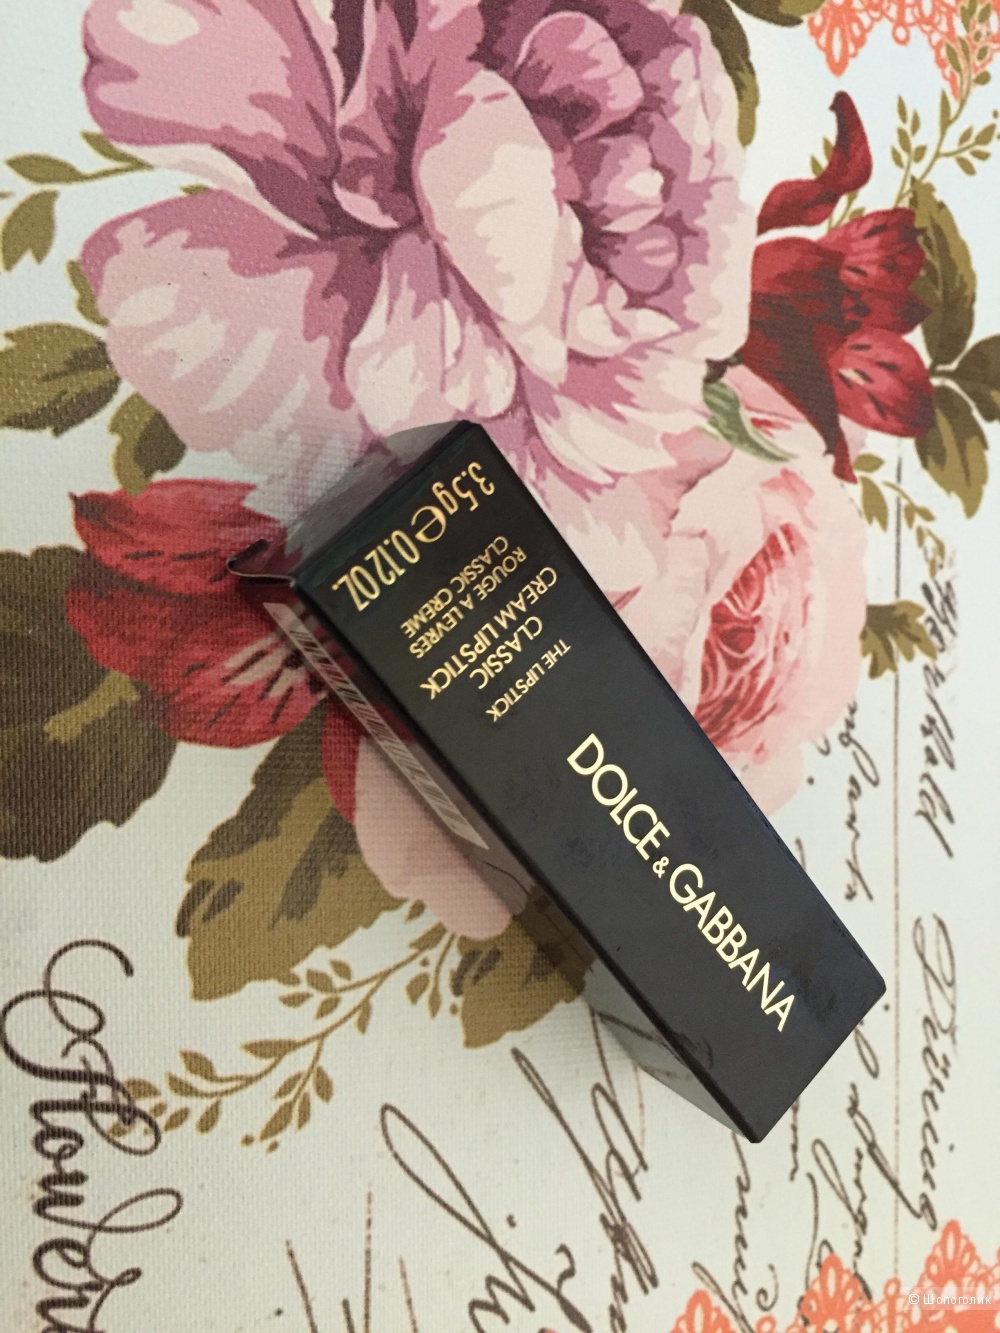 Губная помада Dolce & Gabbana Make up Classic Cream lipstick